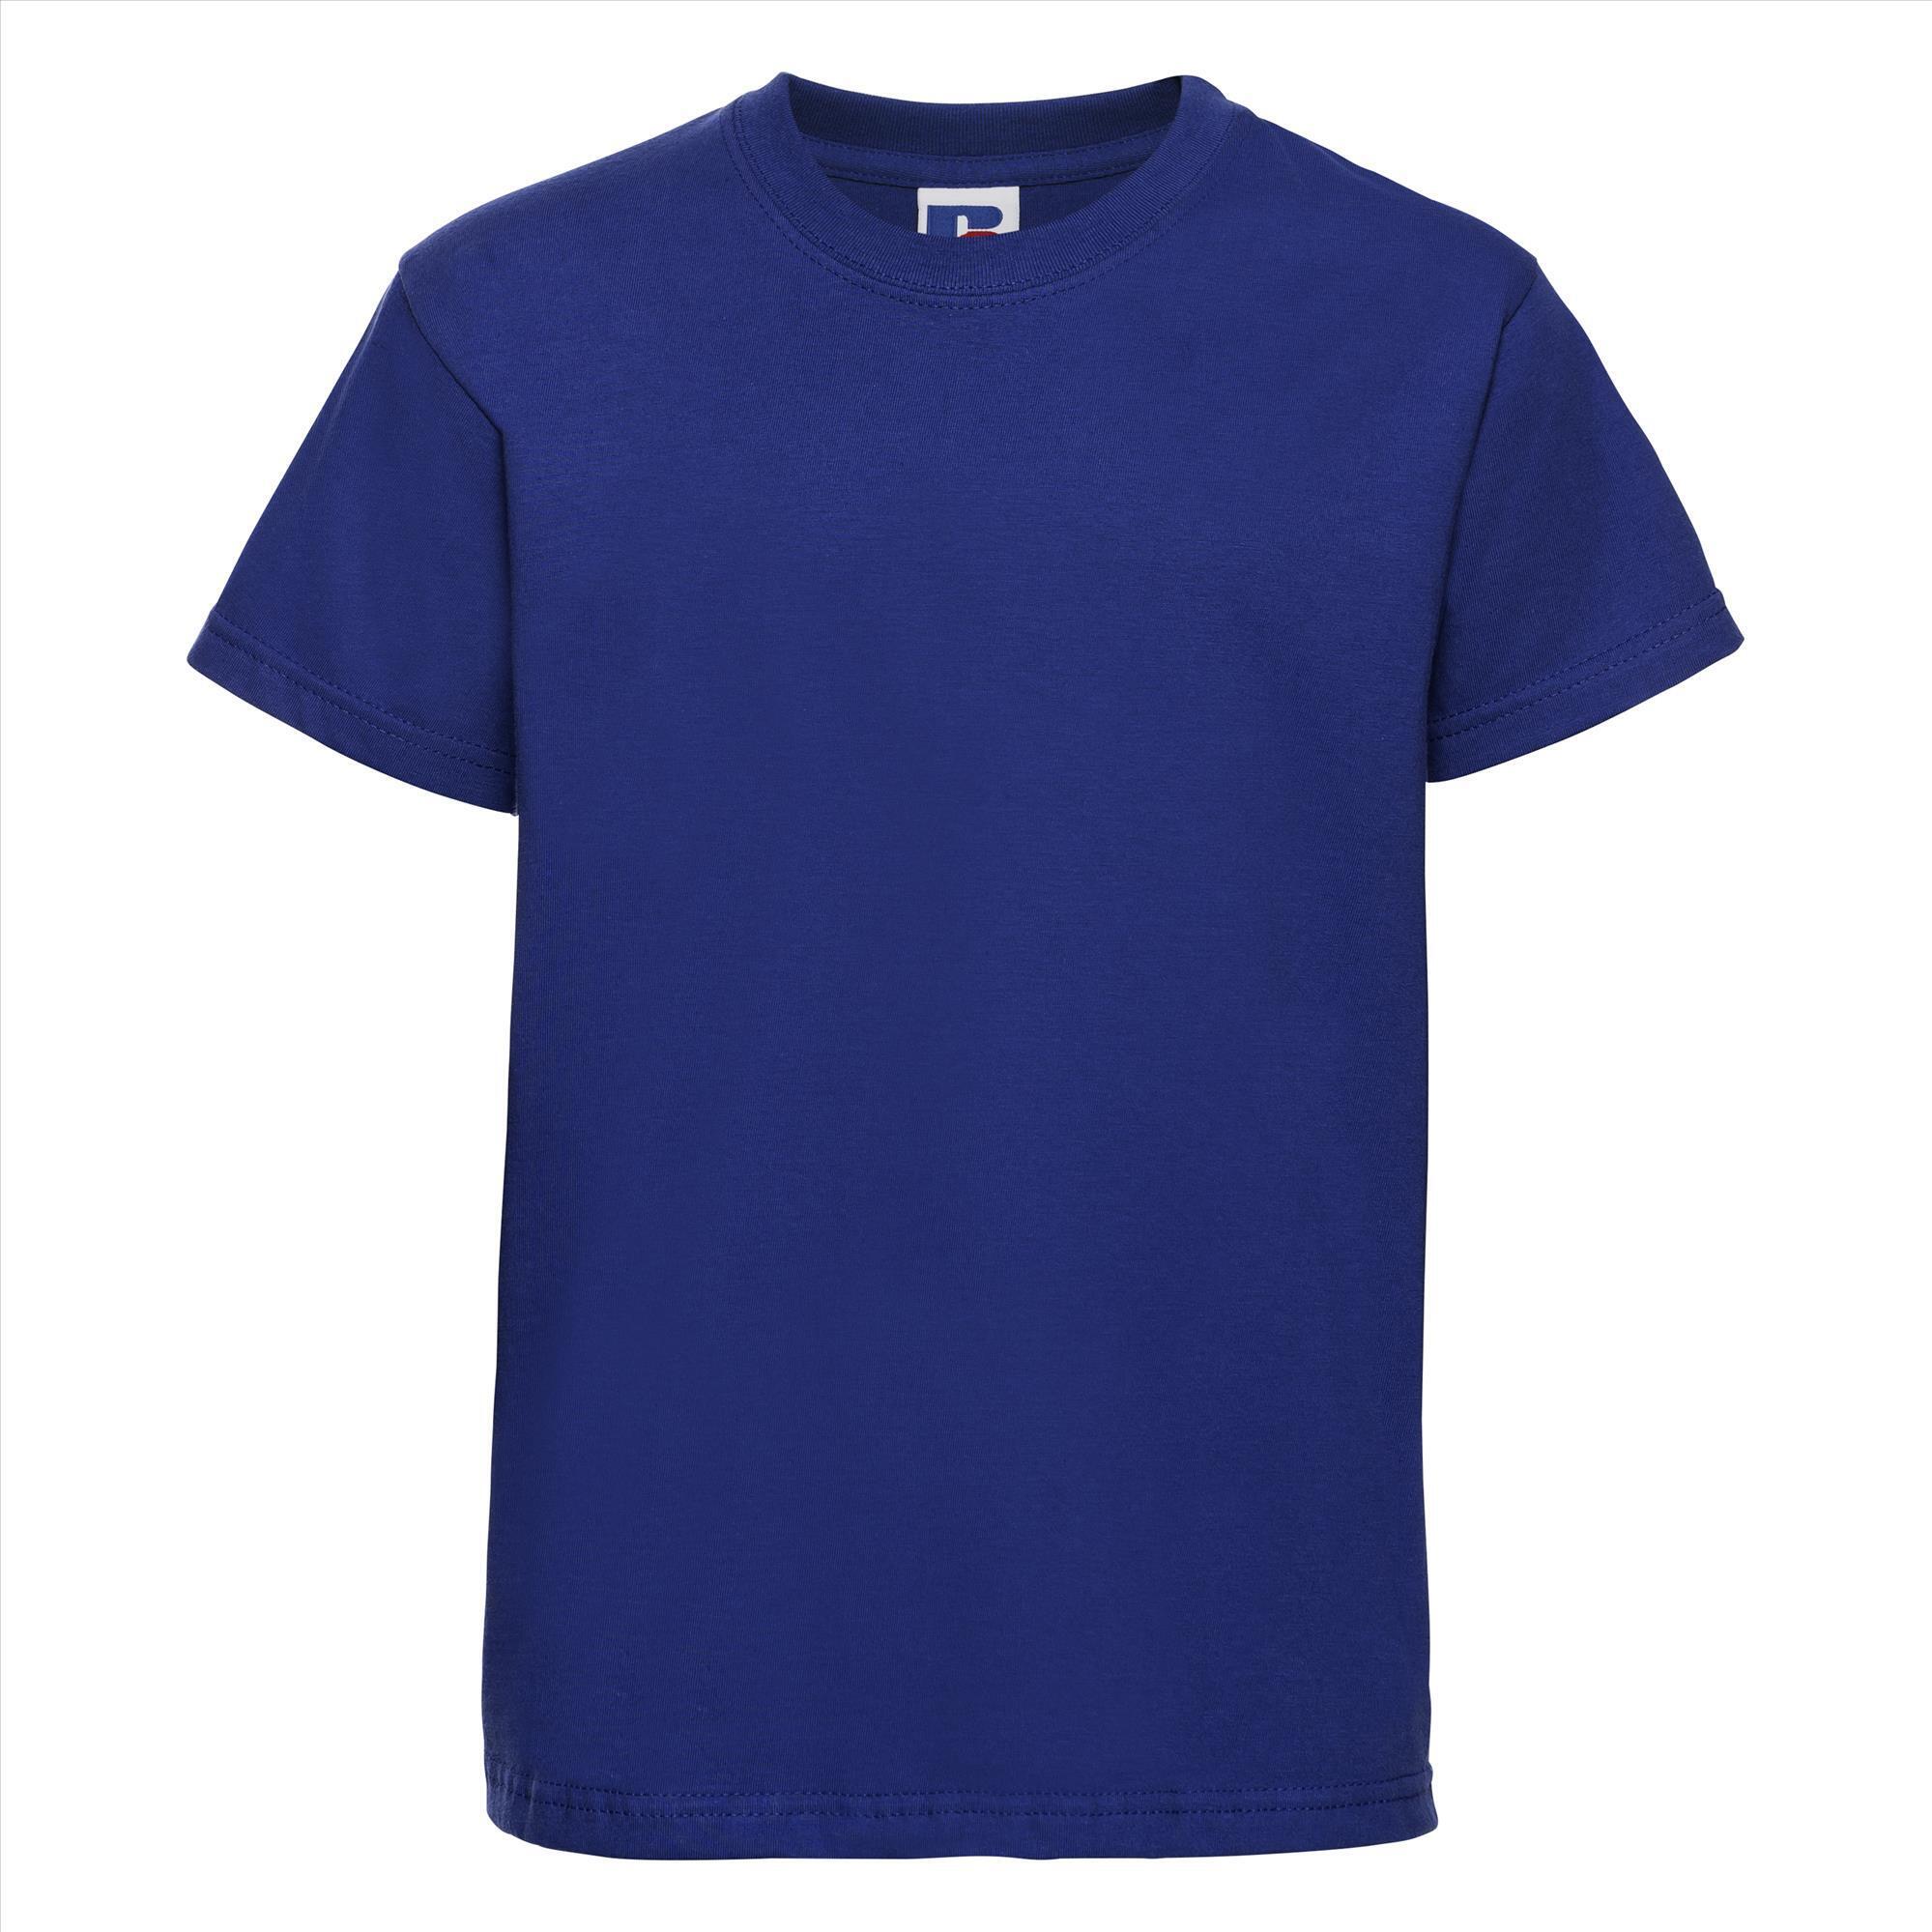 Kinder t-shirt royal blauw te personaliseren bedrukbaar